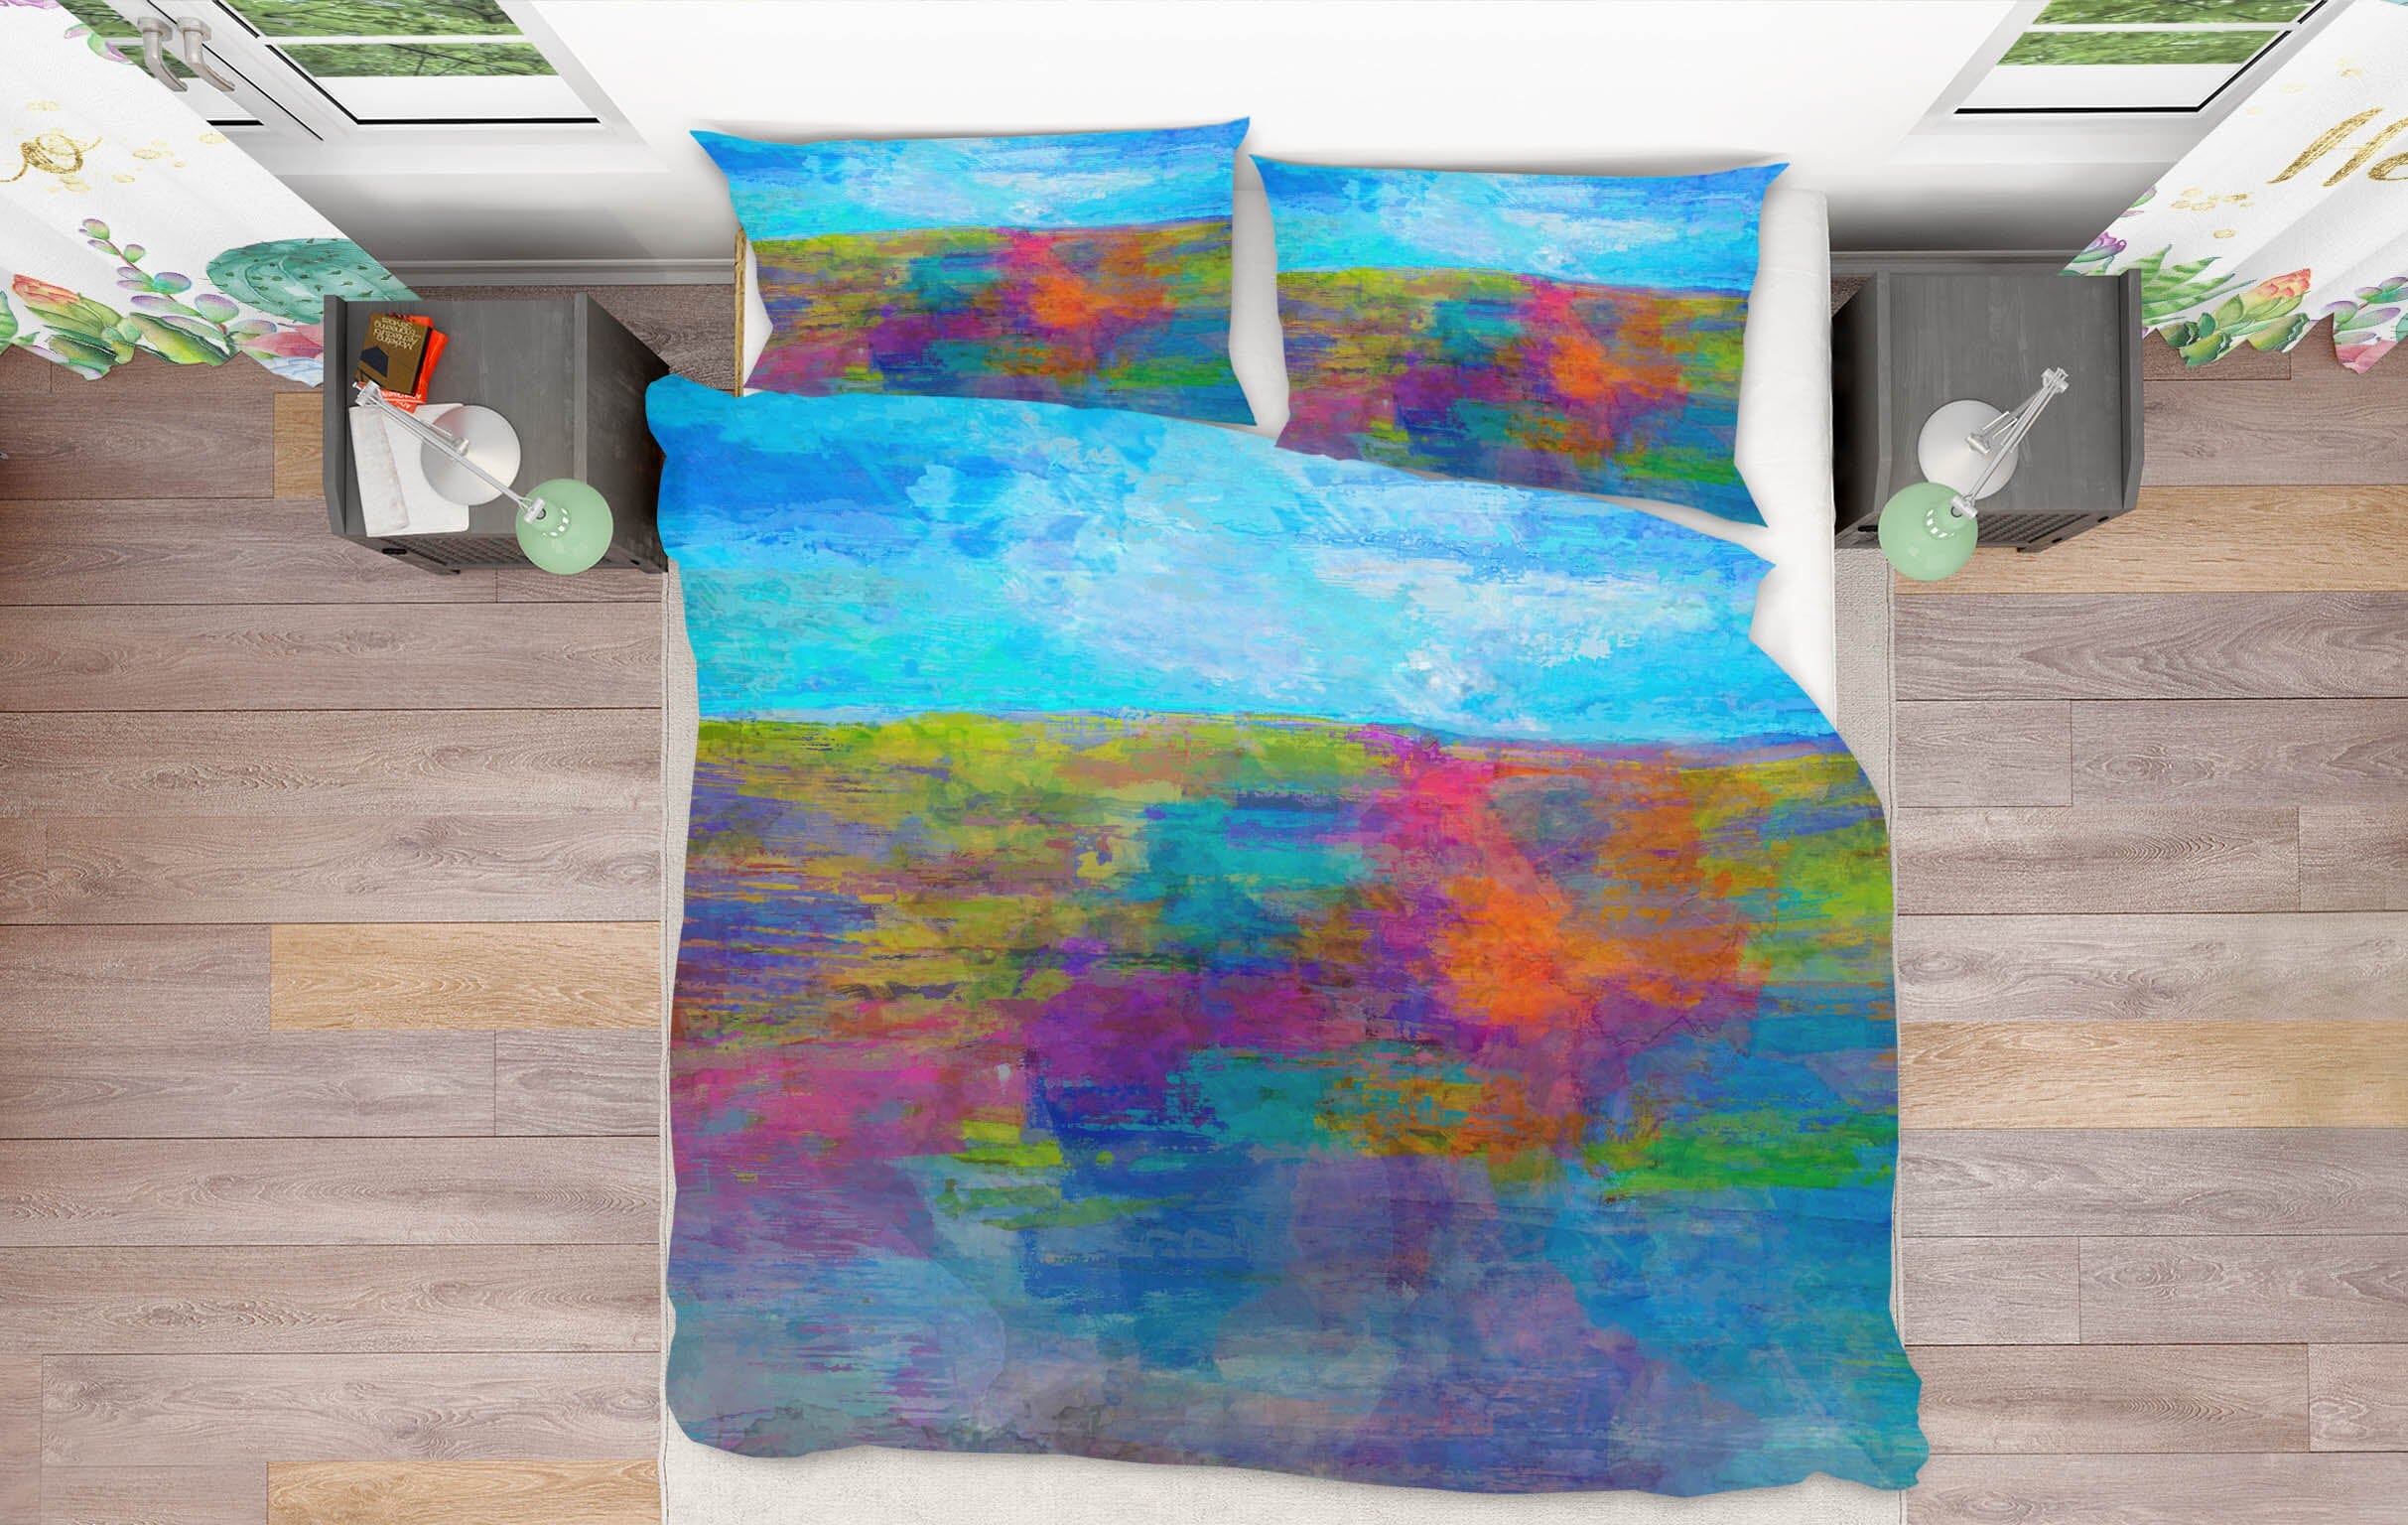 3D Colored Sea Floor 2116 Michael Tienhaara Bedding Bed Pillowcases Quilt Quiet Covers AJ Creativity Home 